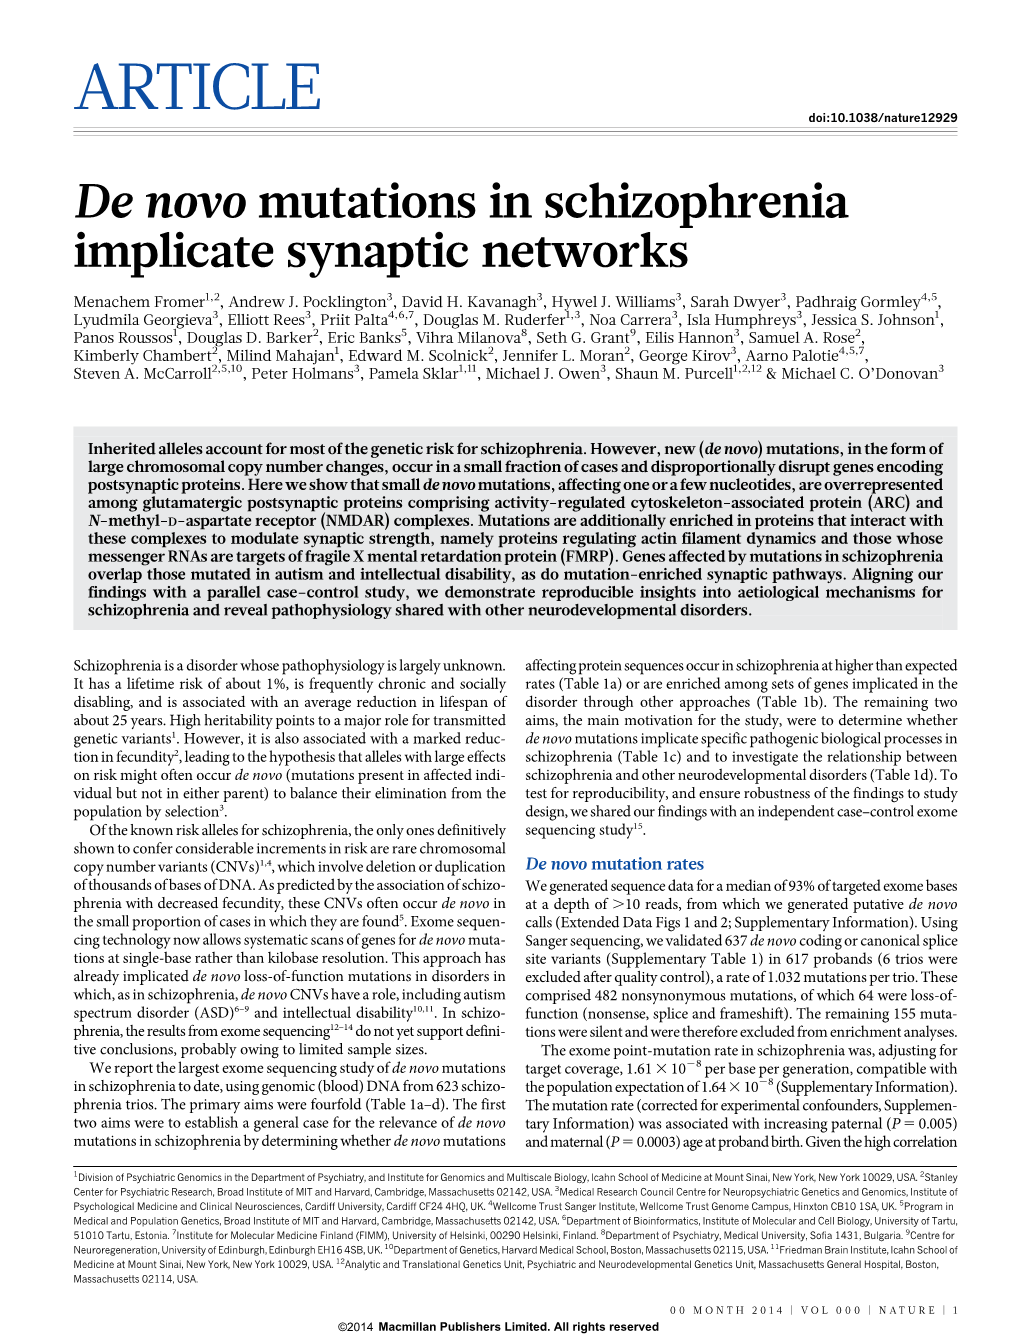 De Novo Mutations in Schizophrenia Implicate Synaptic Networks